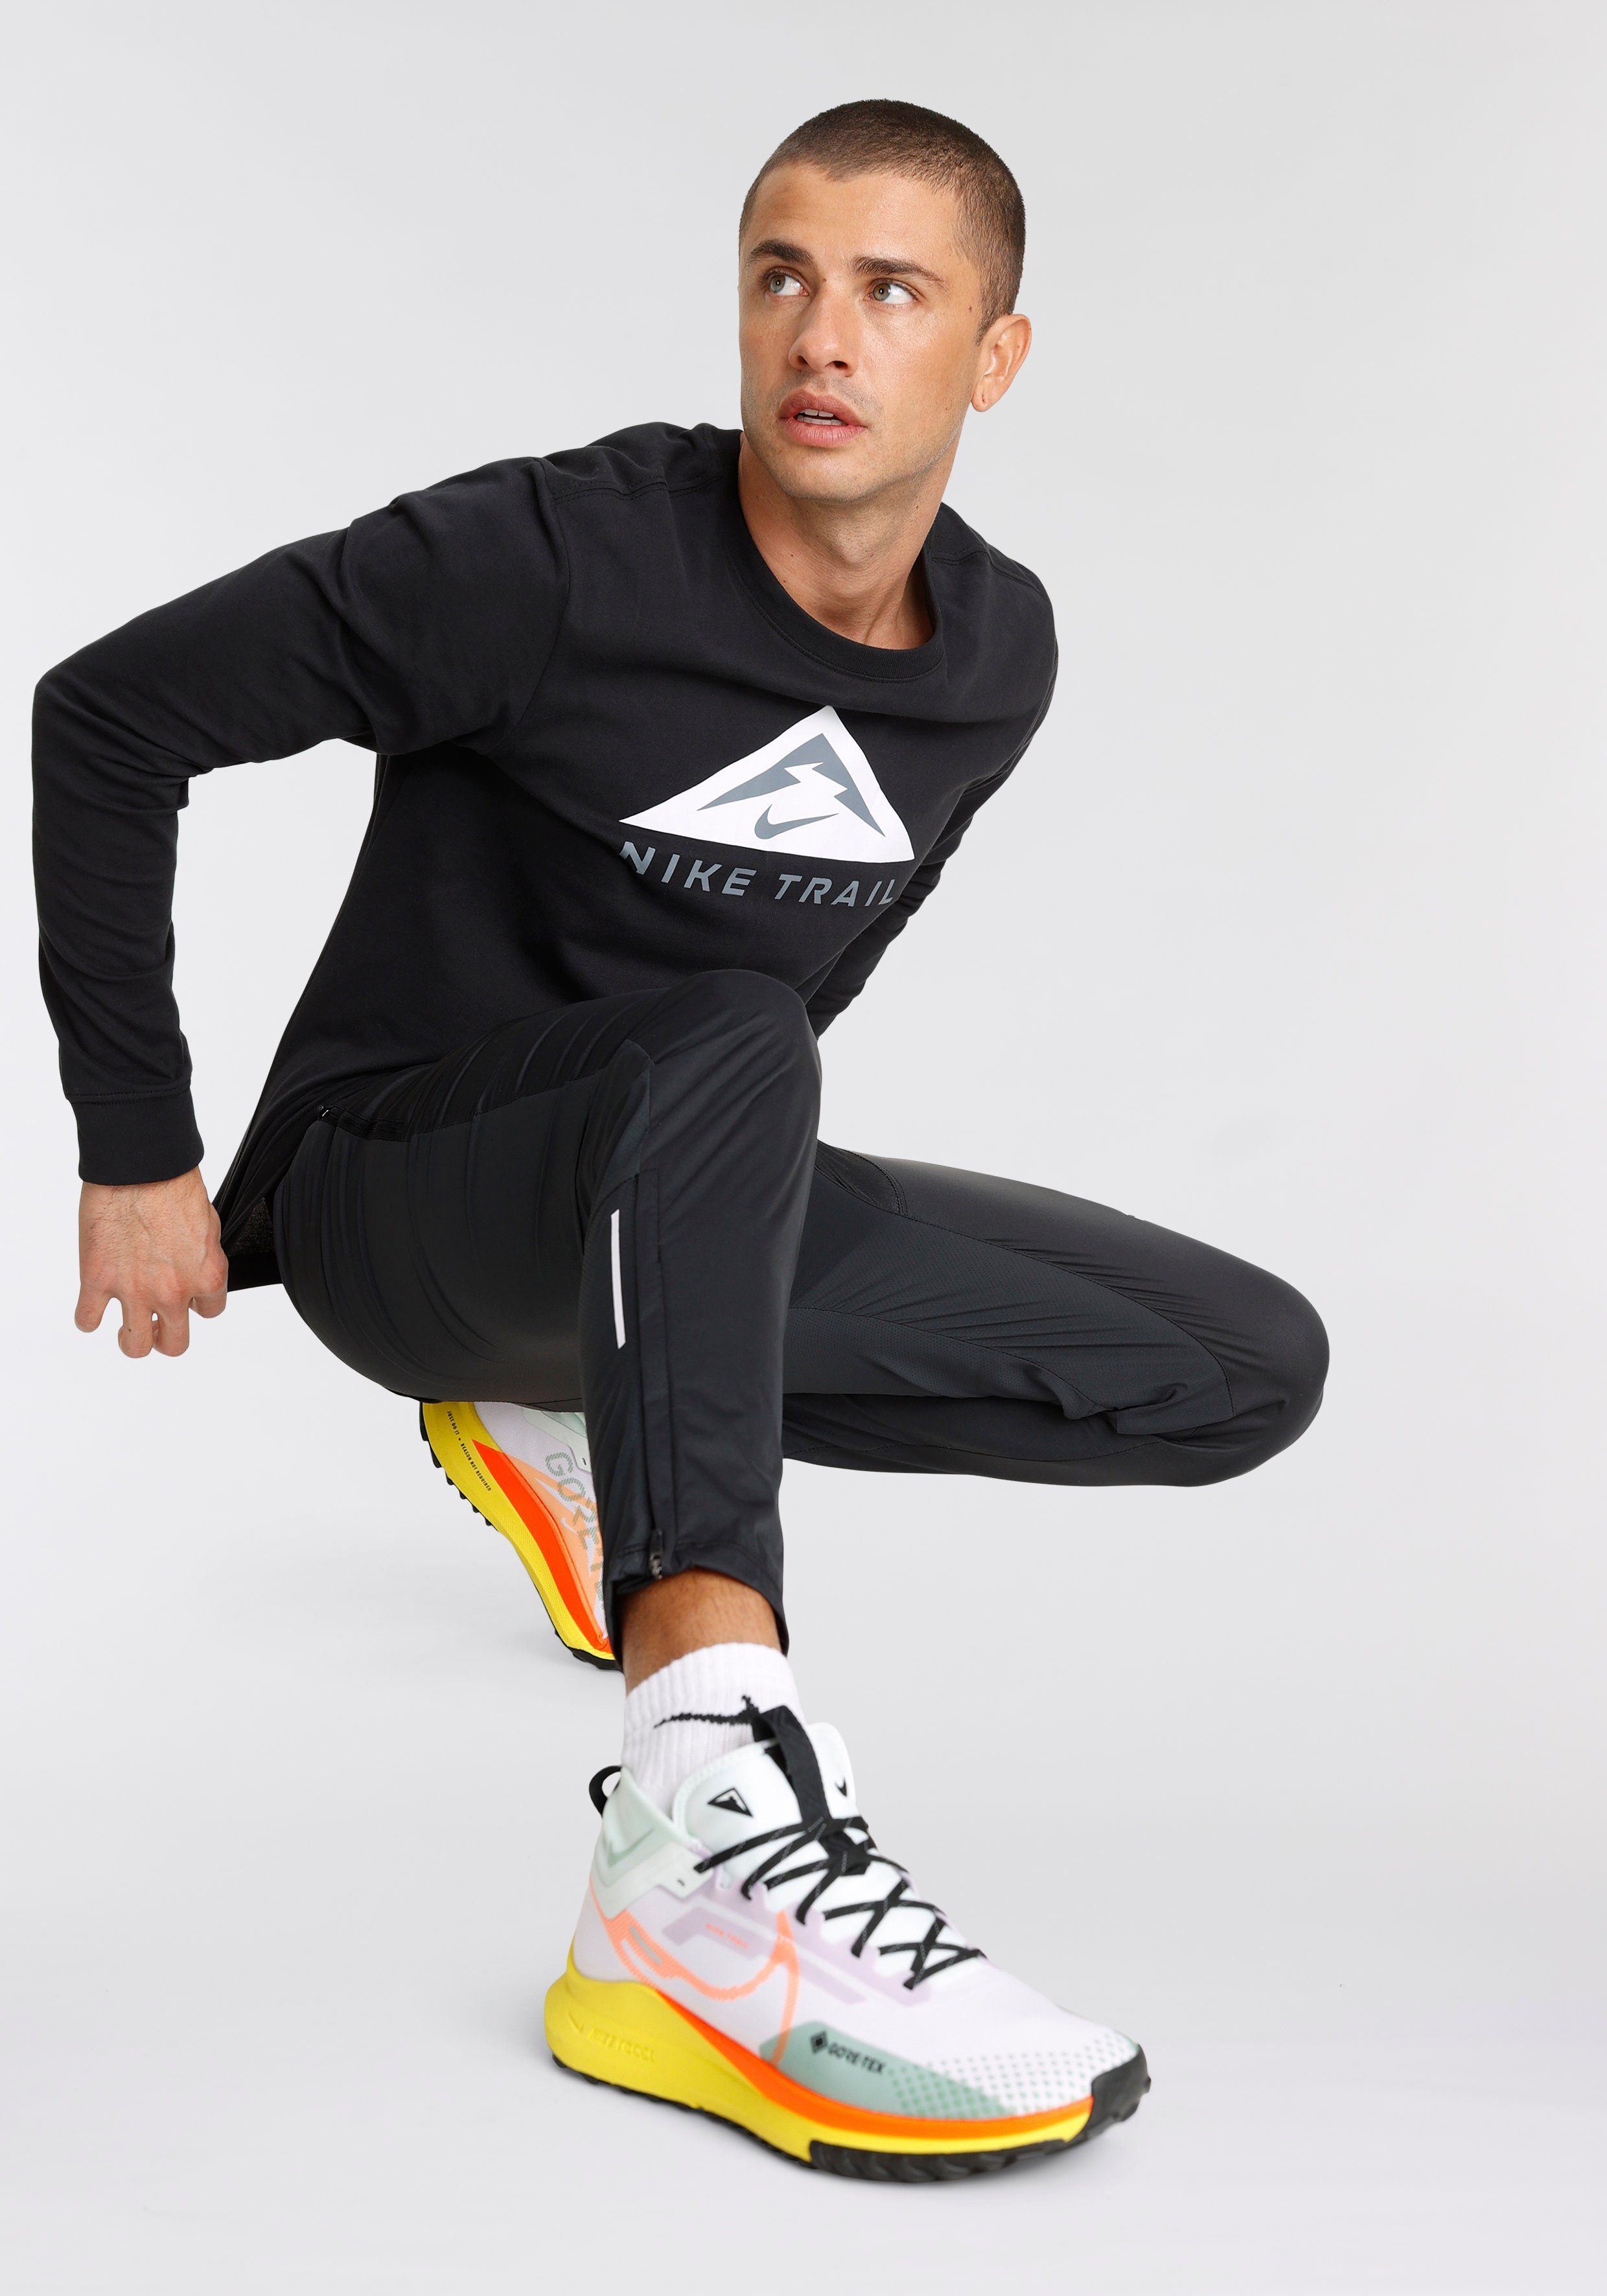 Nike PEGASUS TRAIL 4 GORE-TEX WATERPROO BARELY-GRAPE-TOTAL-ORANGE-BARELY-GREEN Laufschuh wasserdicht